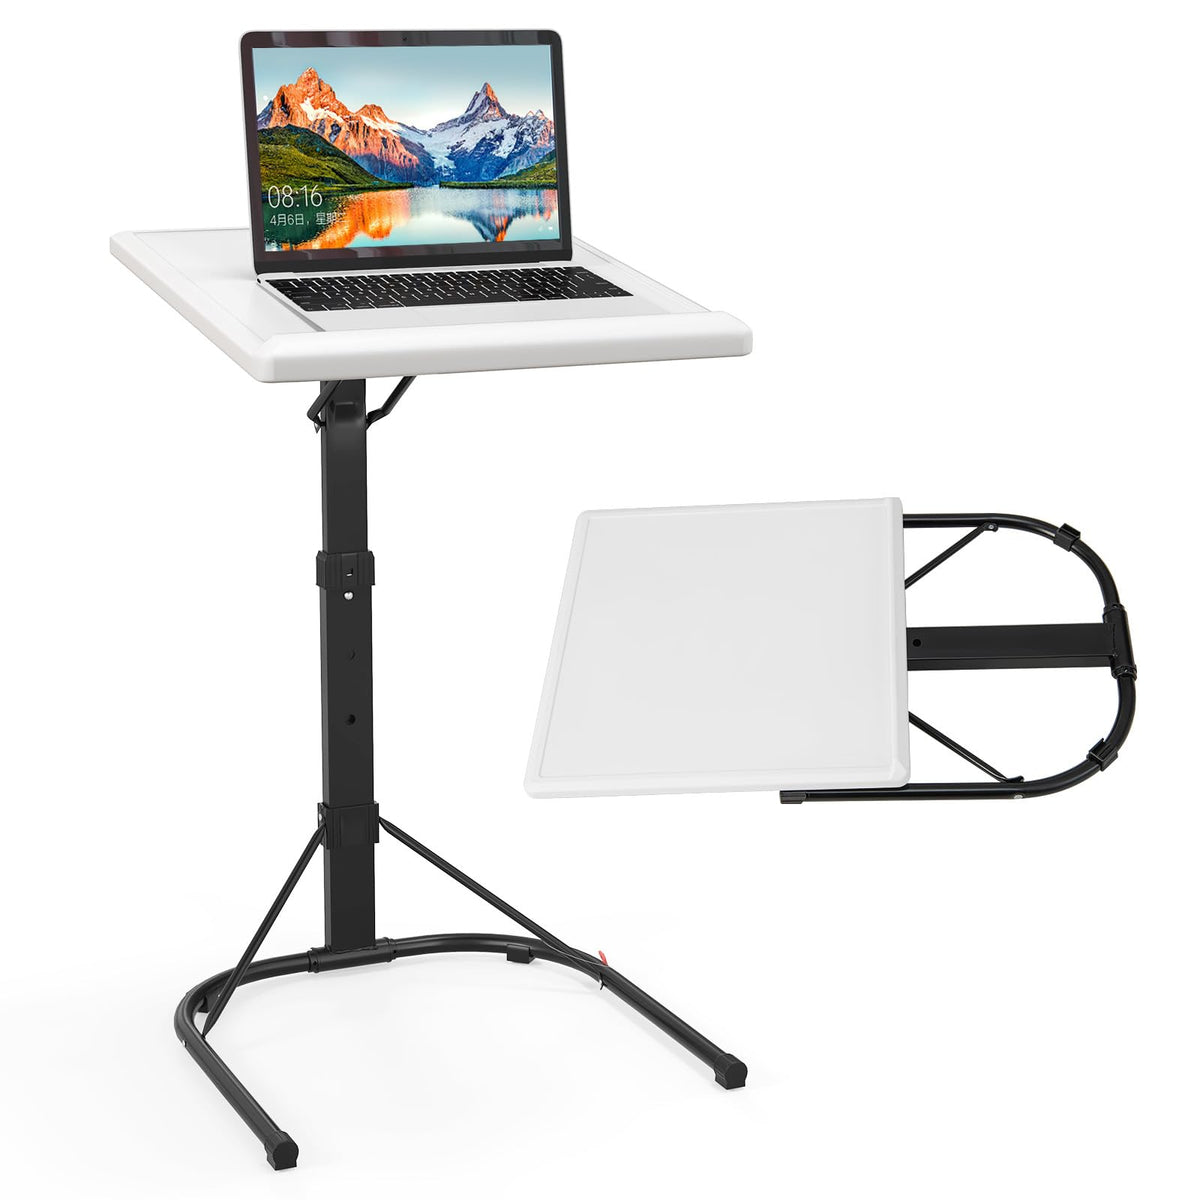 Giantex Height Adjustable C-shaped Laptop Desk